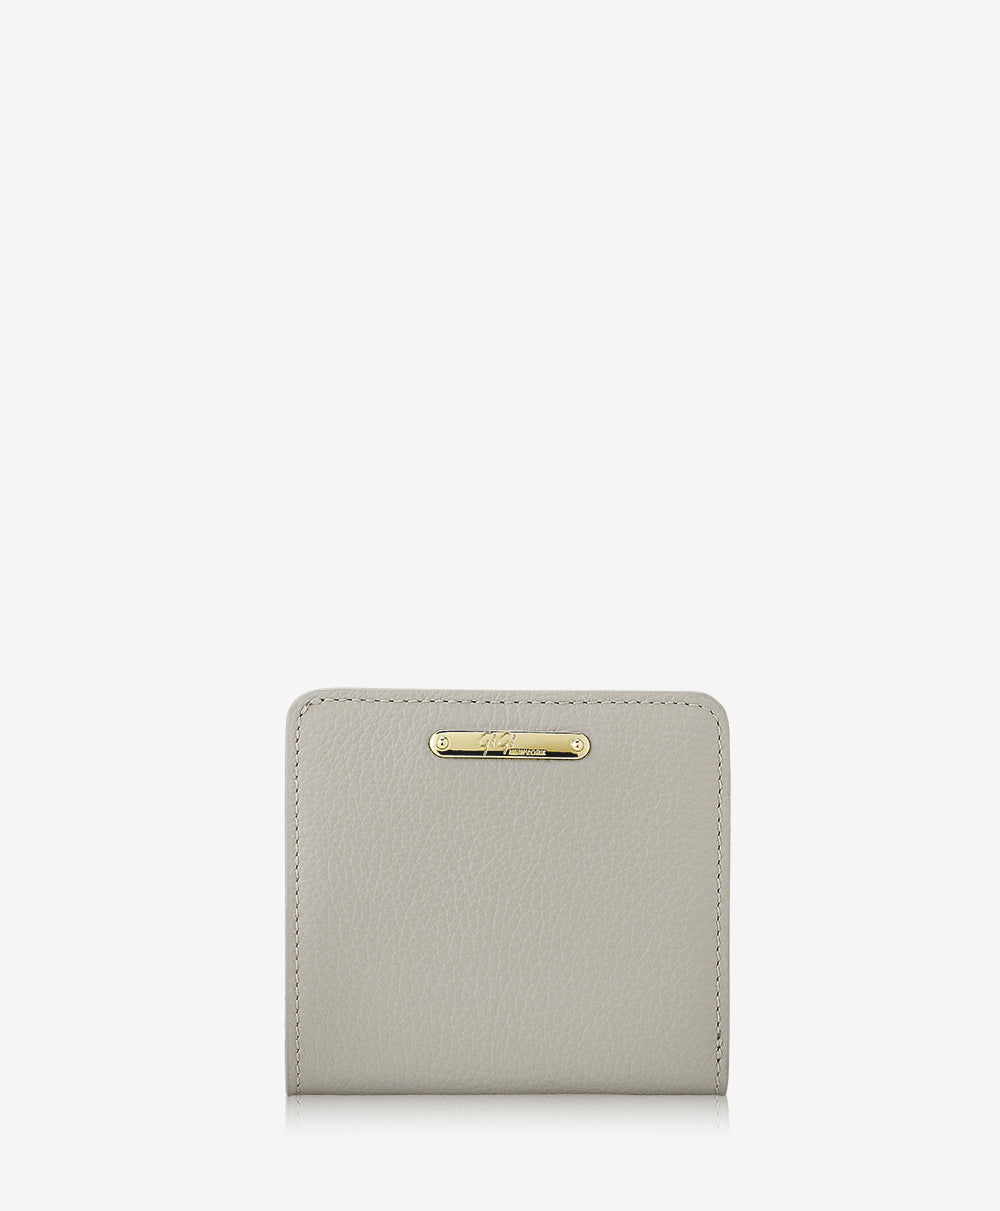 GiGi New York Mini Foldover Wallet Oyster Pebble Grain Leather